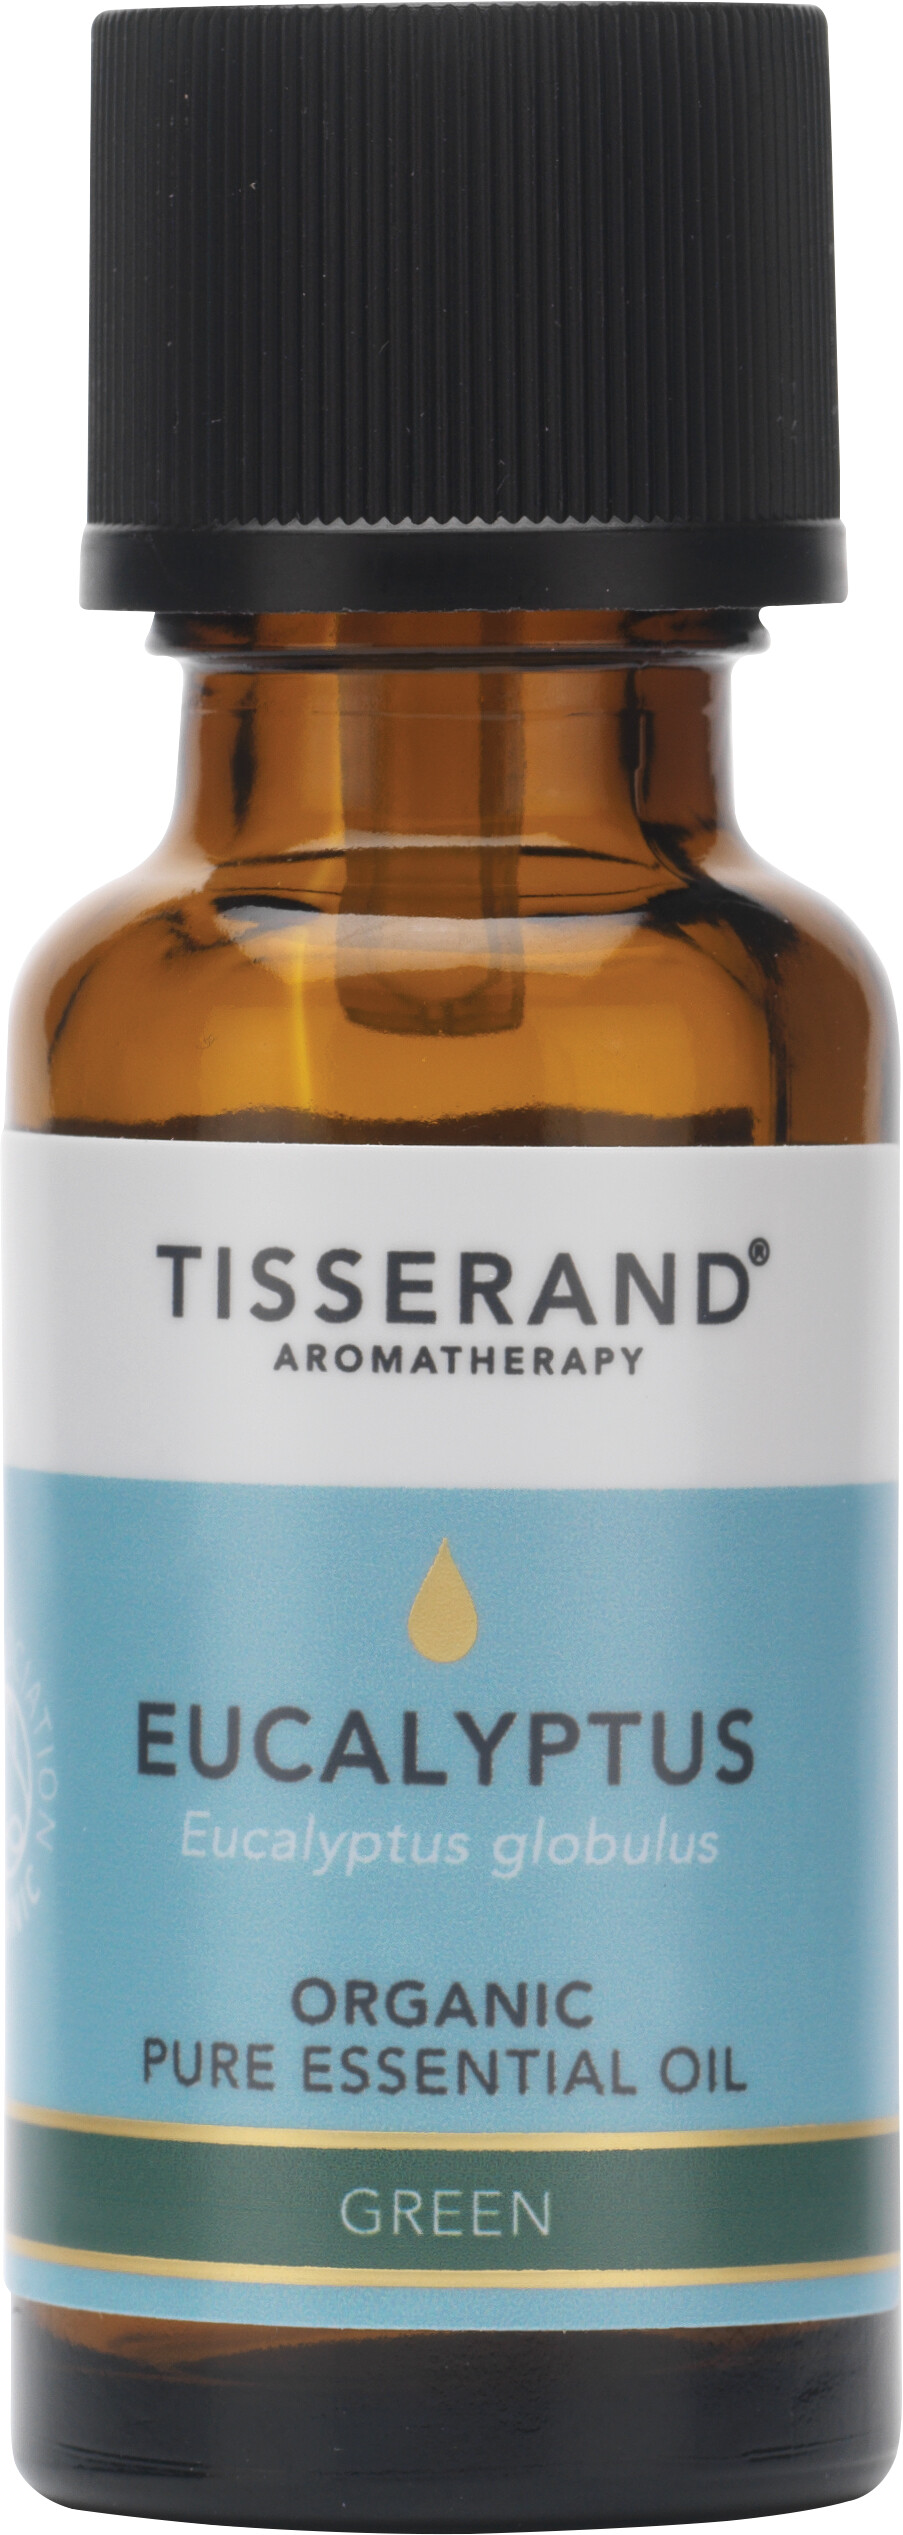 Tisserand Aromatherapy Eucalyptus Organic Pure Essential Oil 20ml